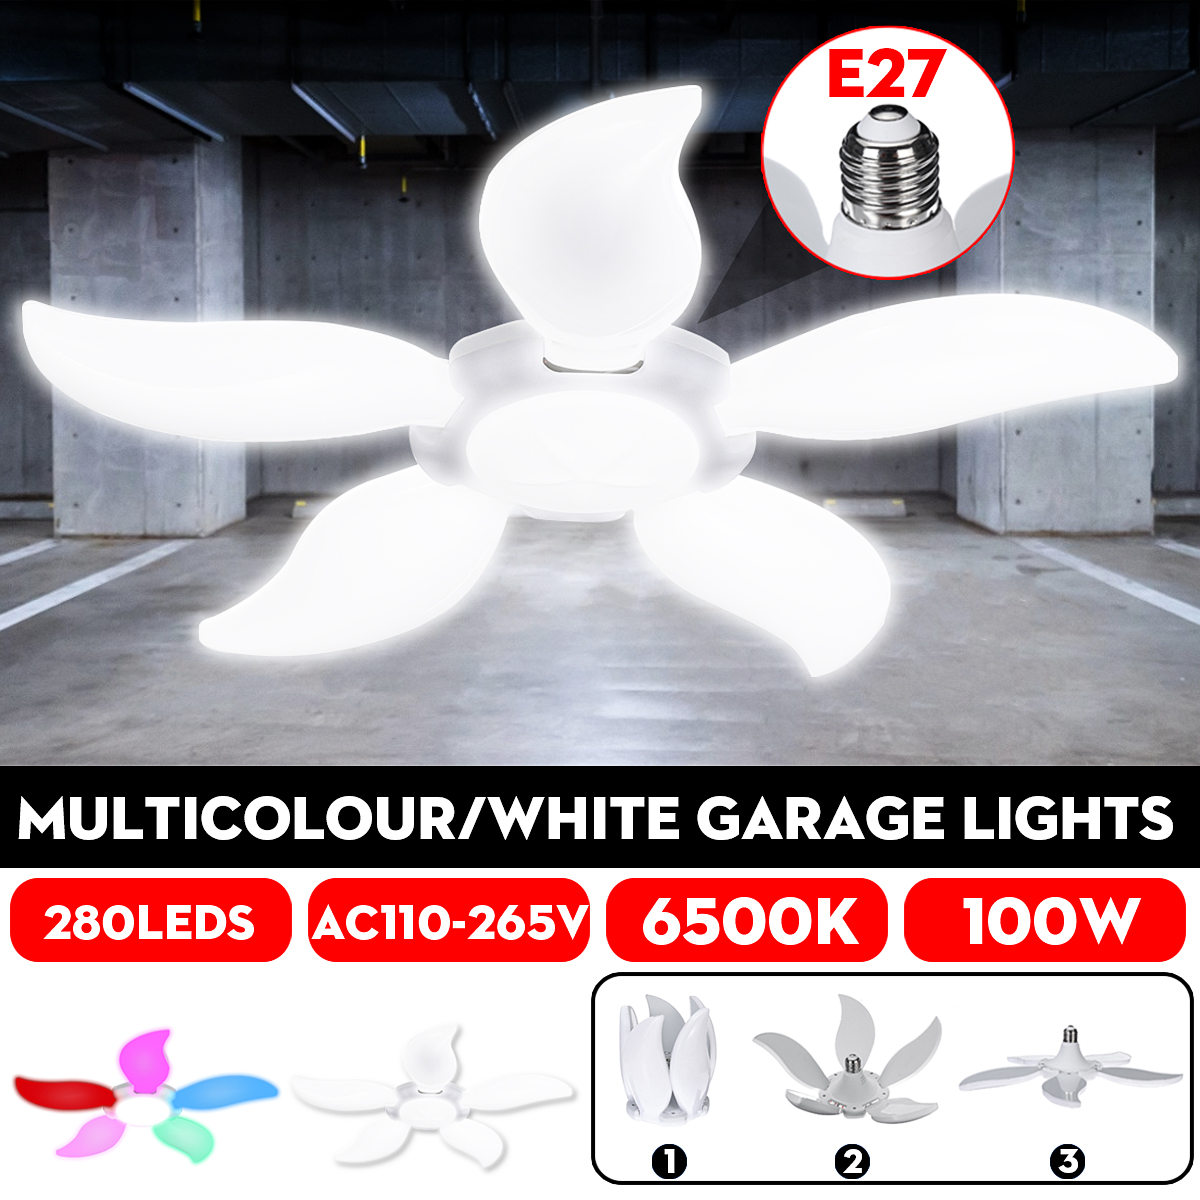 100W-E27-Colorful-Cool-White-280LED-Garage-Light-Bulb-Deformable-Ceiling-Workshop-Lamp-for-Parking-B-1621887-1